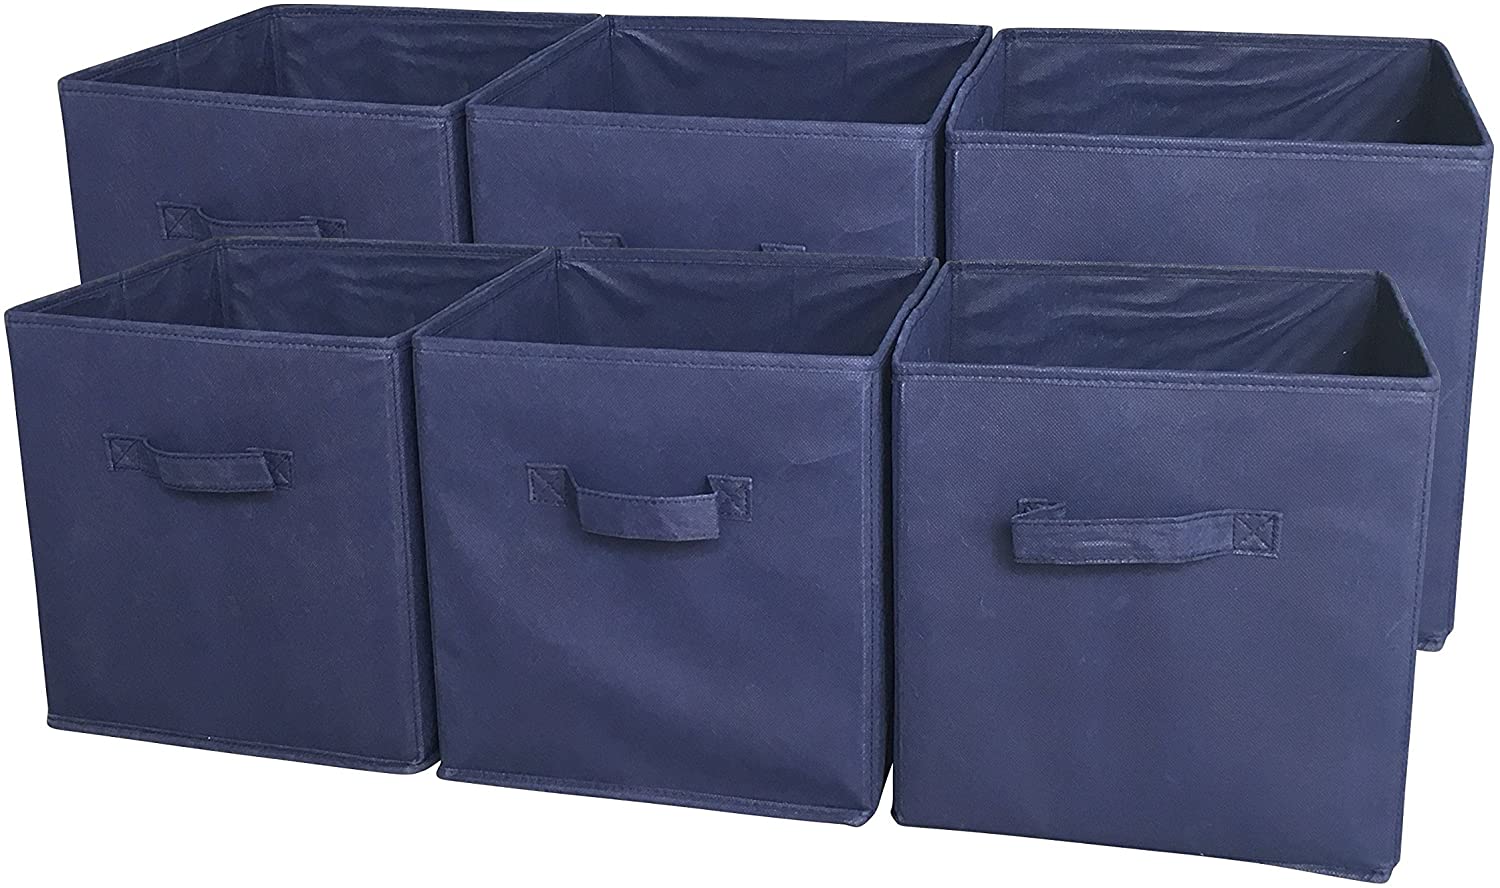 Sodynee Foldable Cloth Storage Cube, 6-Pack